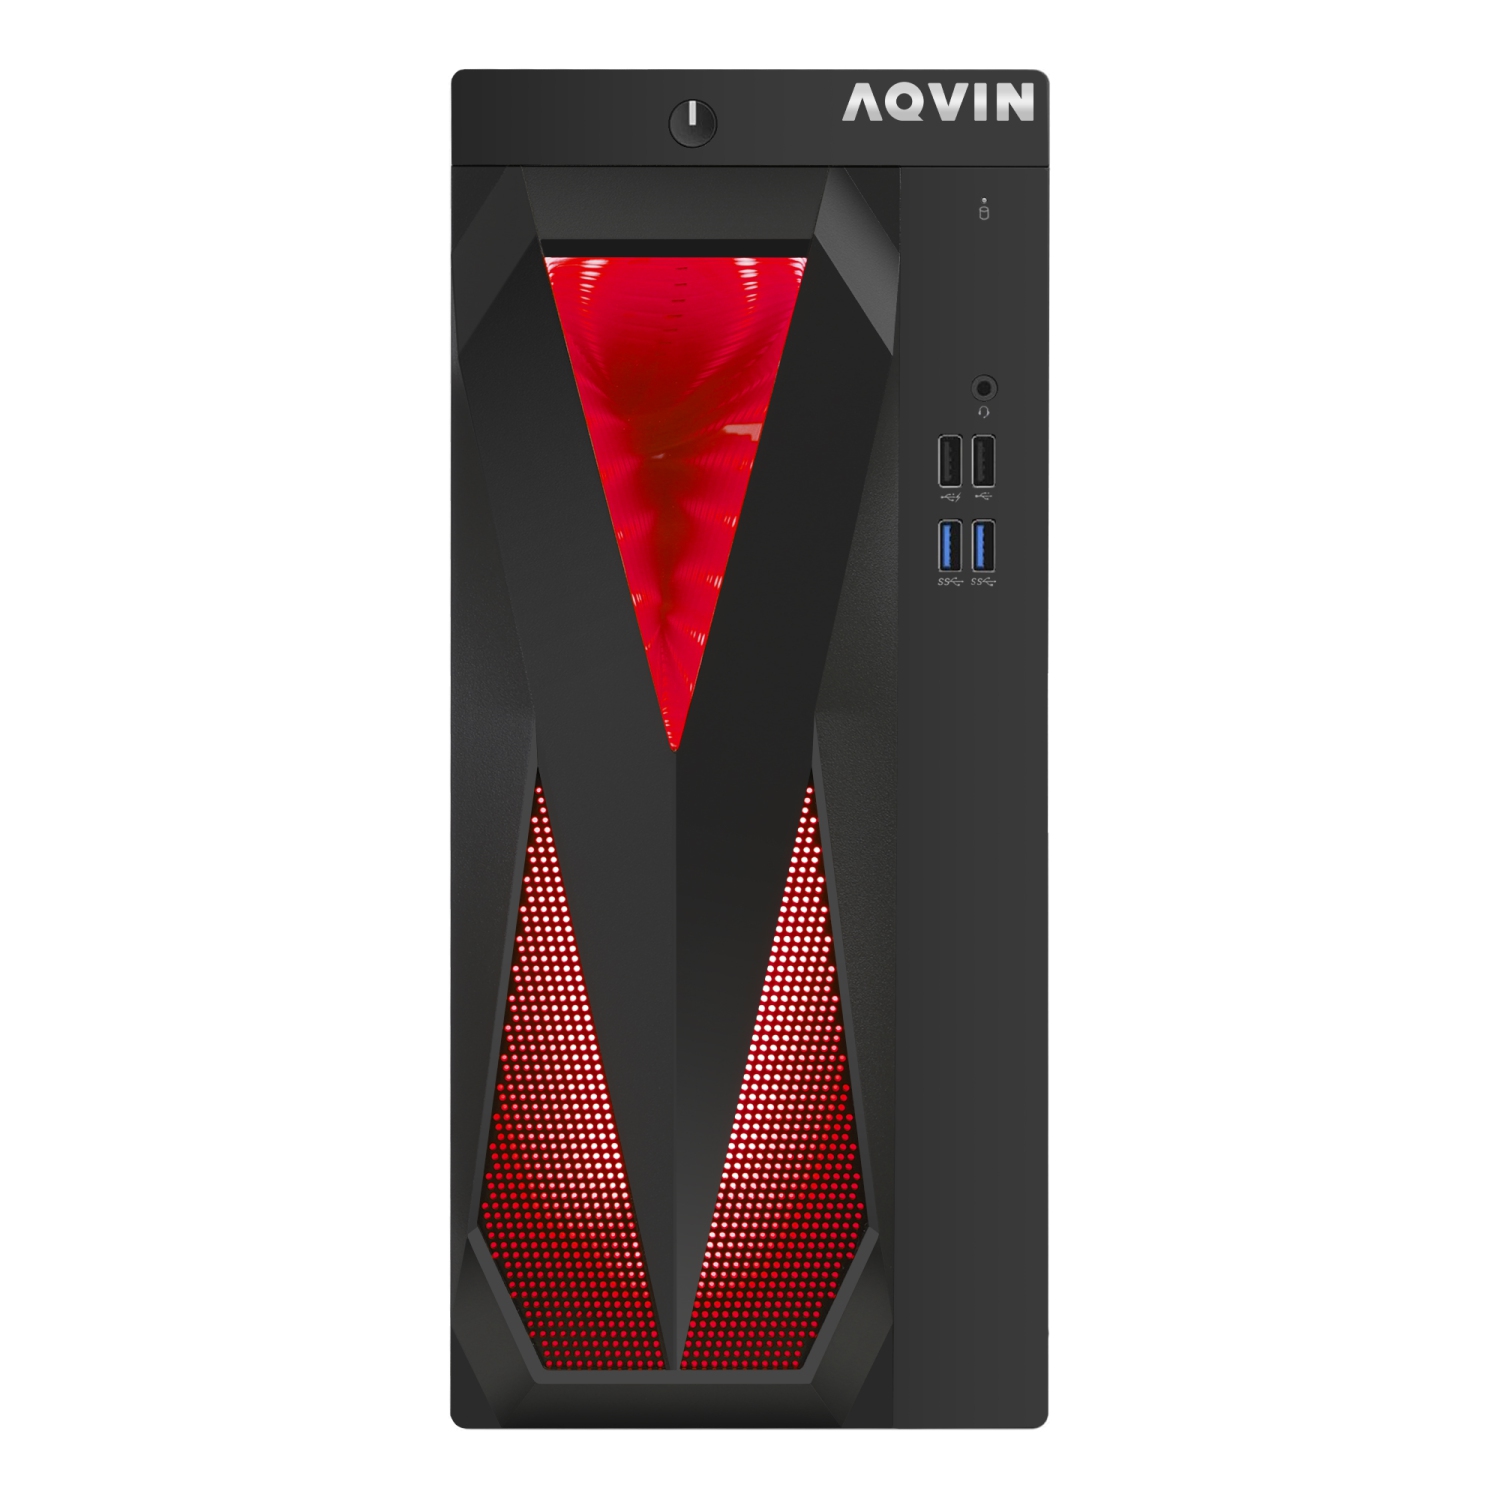 Refurbished (Excellent) - Gaming PC AQVIN InfinityLite Desktop Computer Tower| RGB Lights| Intel Core i5 CPU upto 4.10 GHz| 32GB RAM| 1TB SSD| GeForce GTX 1650 GPU| WIN 11 Pro